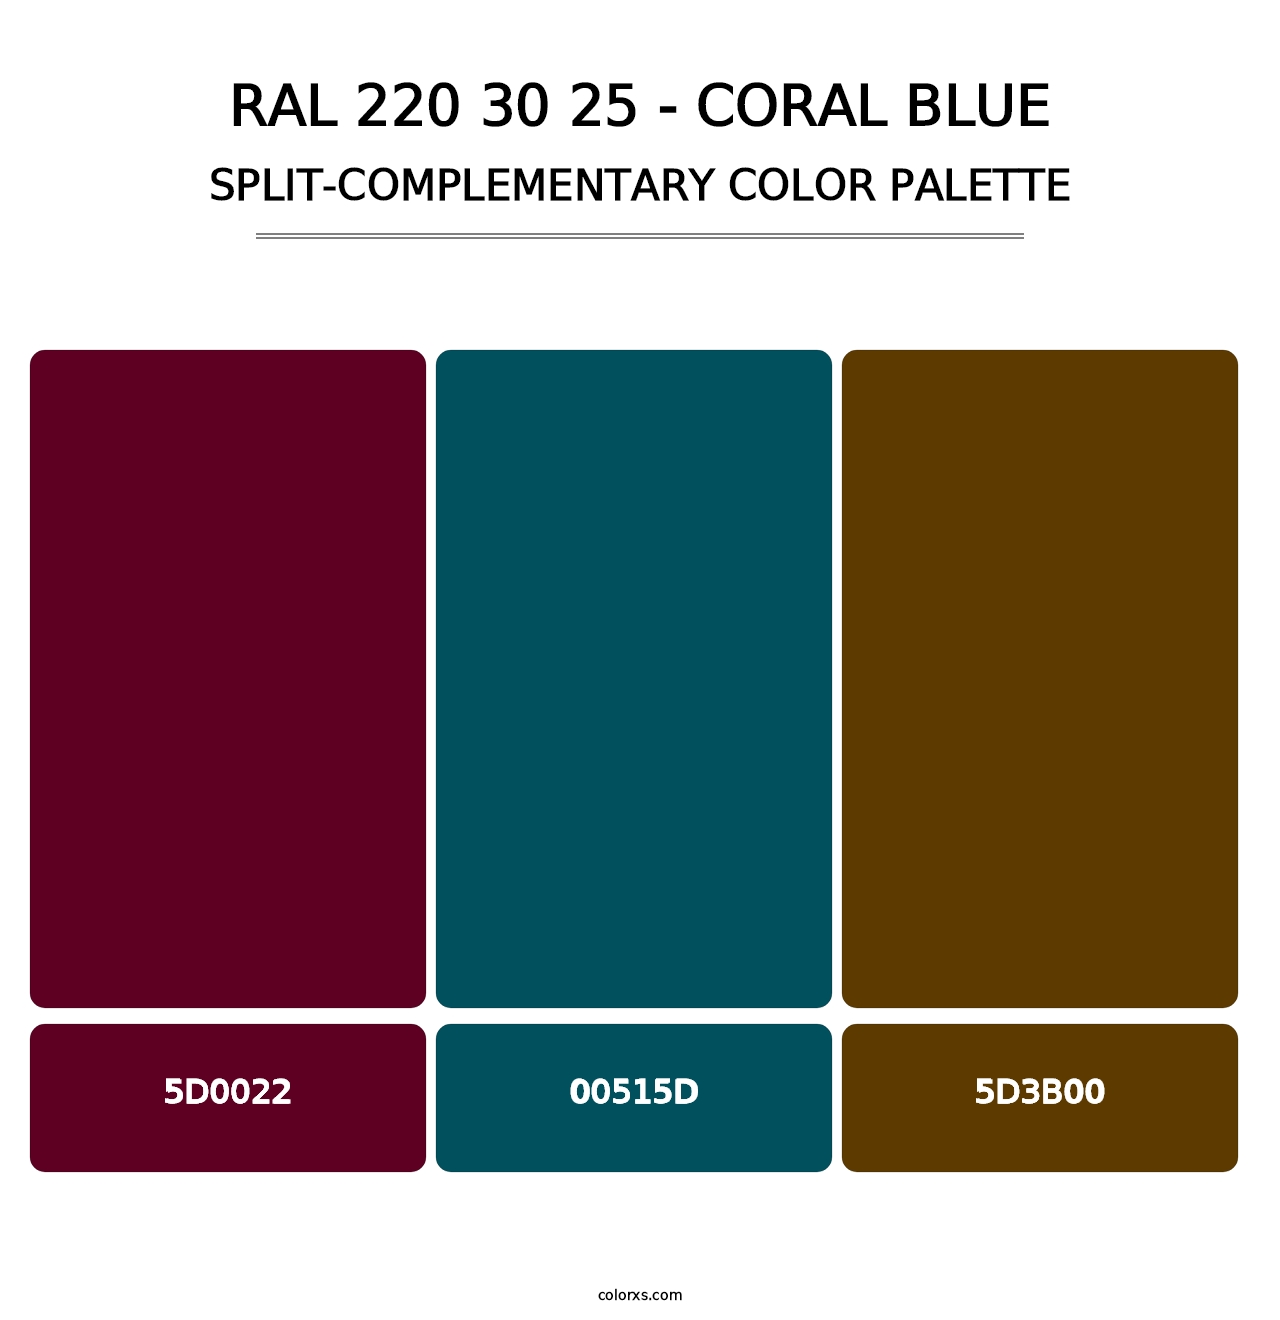 RAL 220 30 25 - Coral Blue - Split-Complementary Color Palette